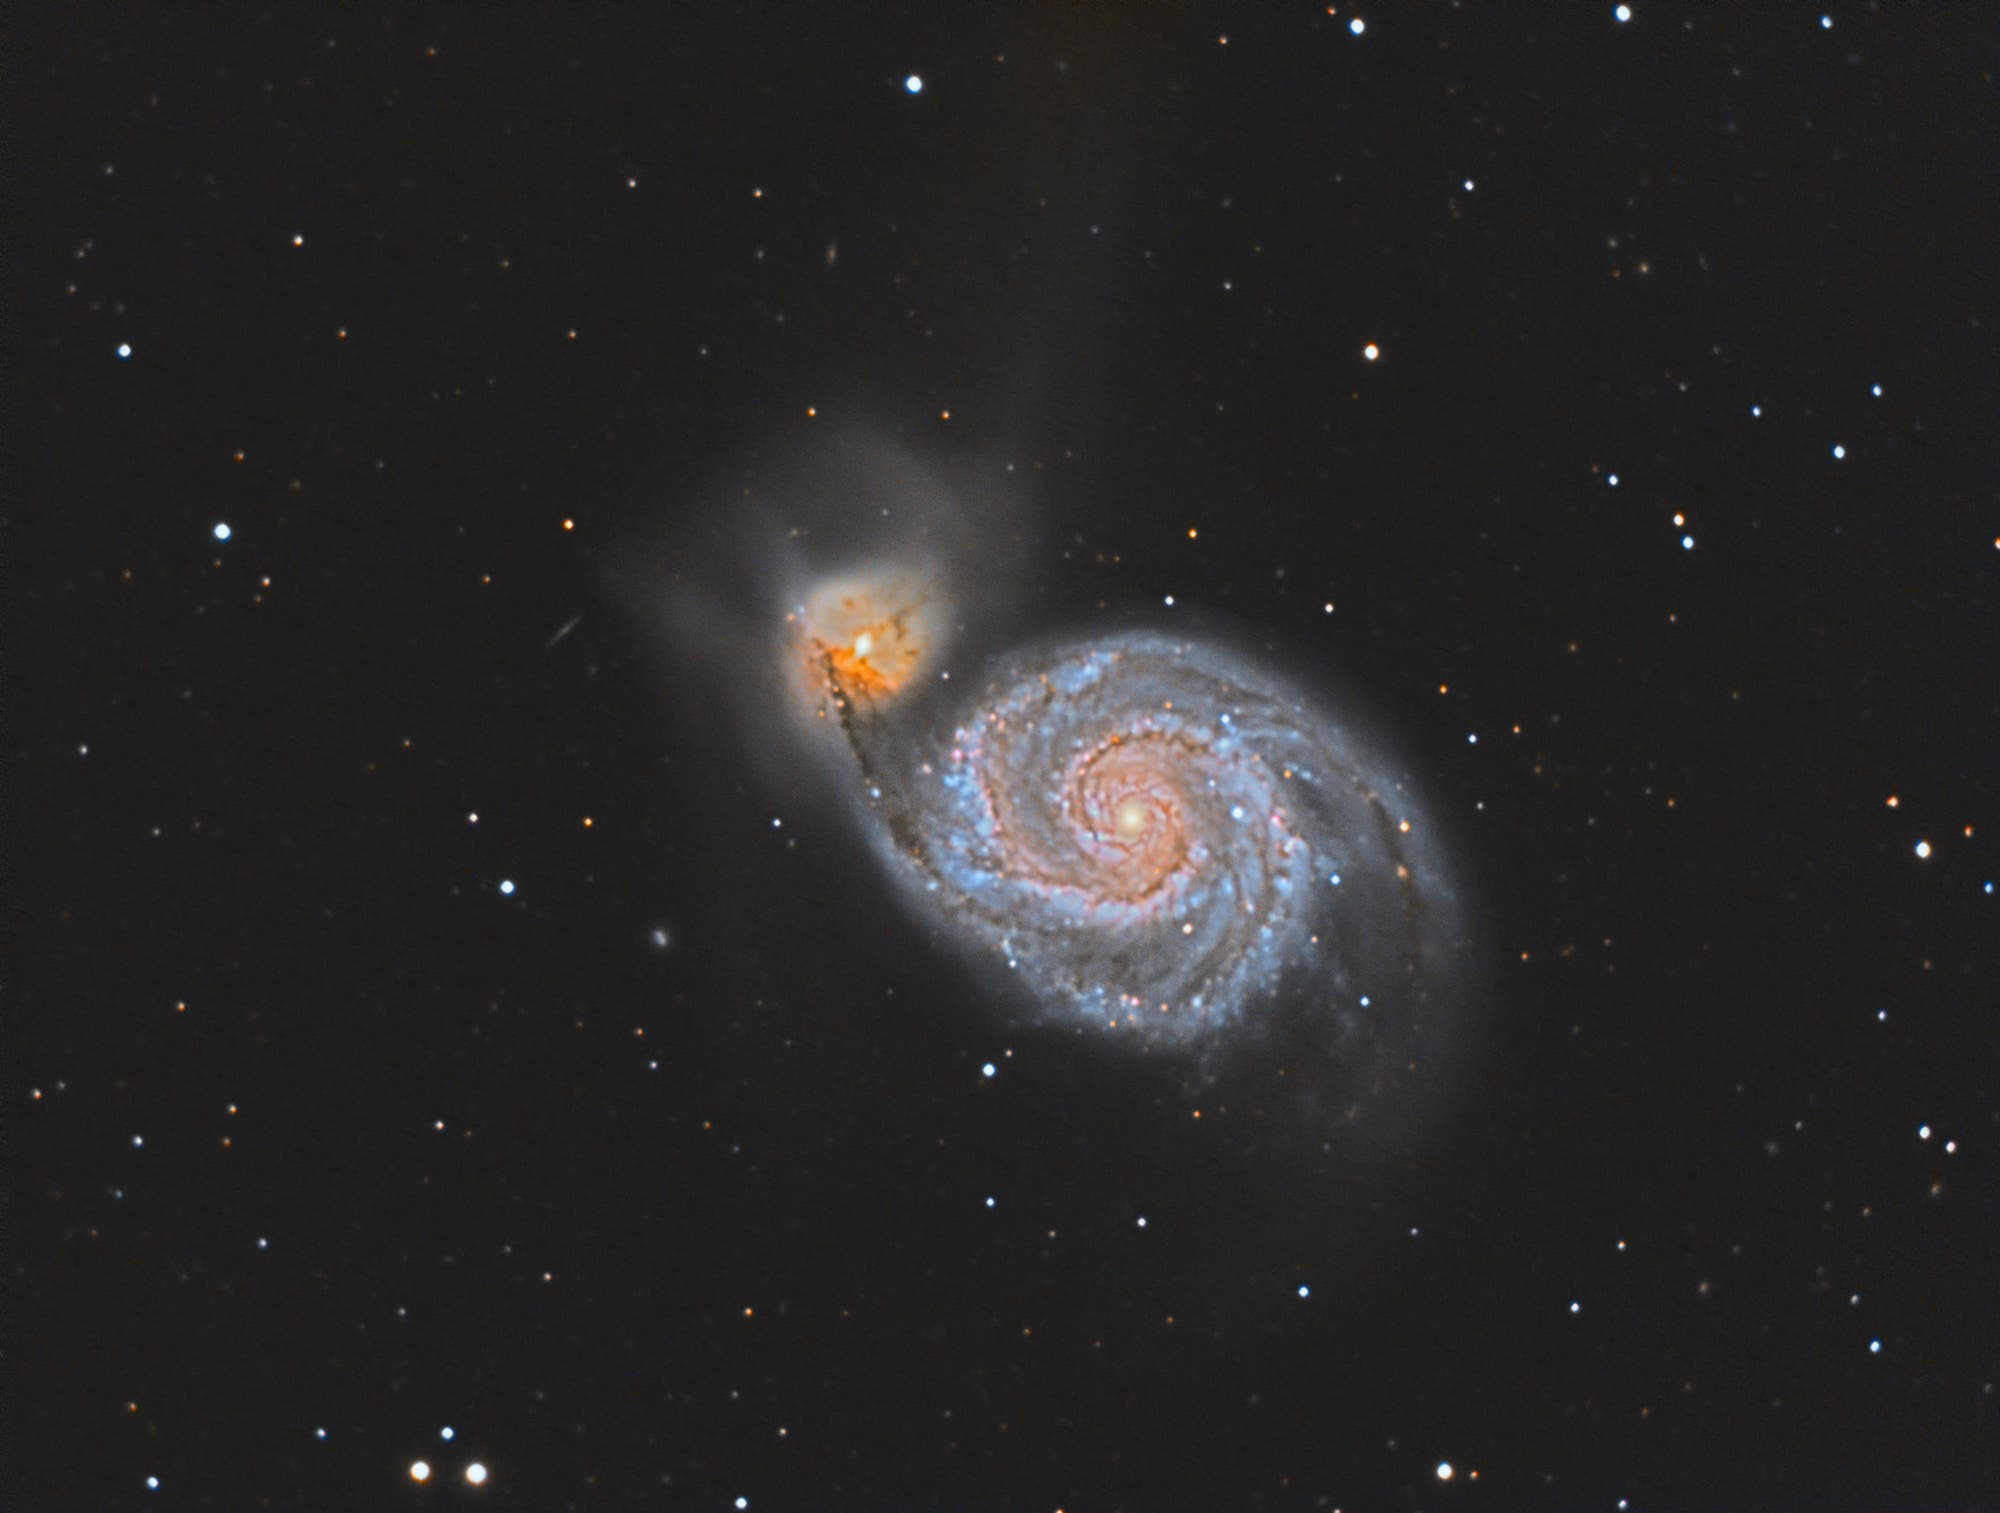 Whirlpool-Galaxie M 51